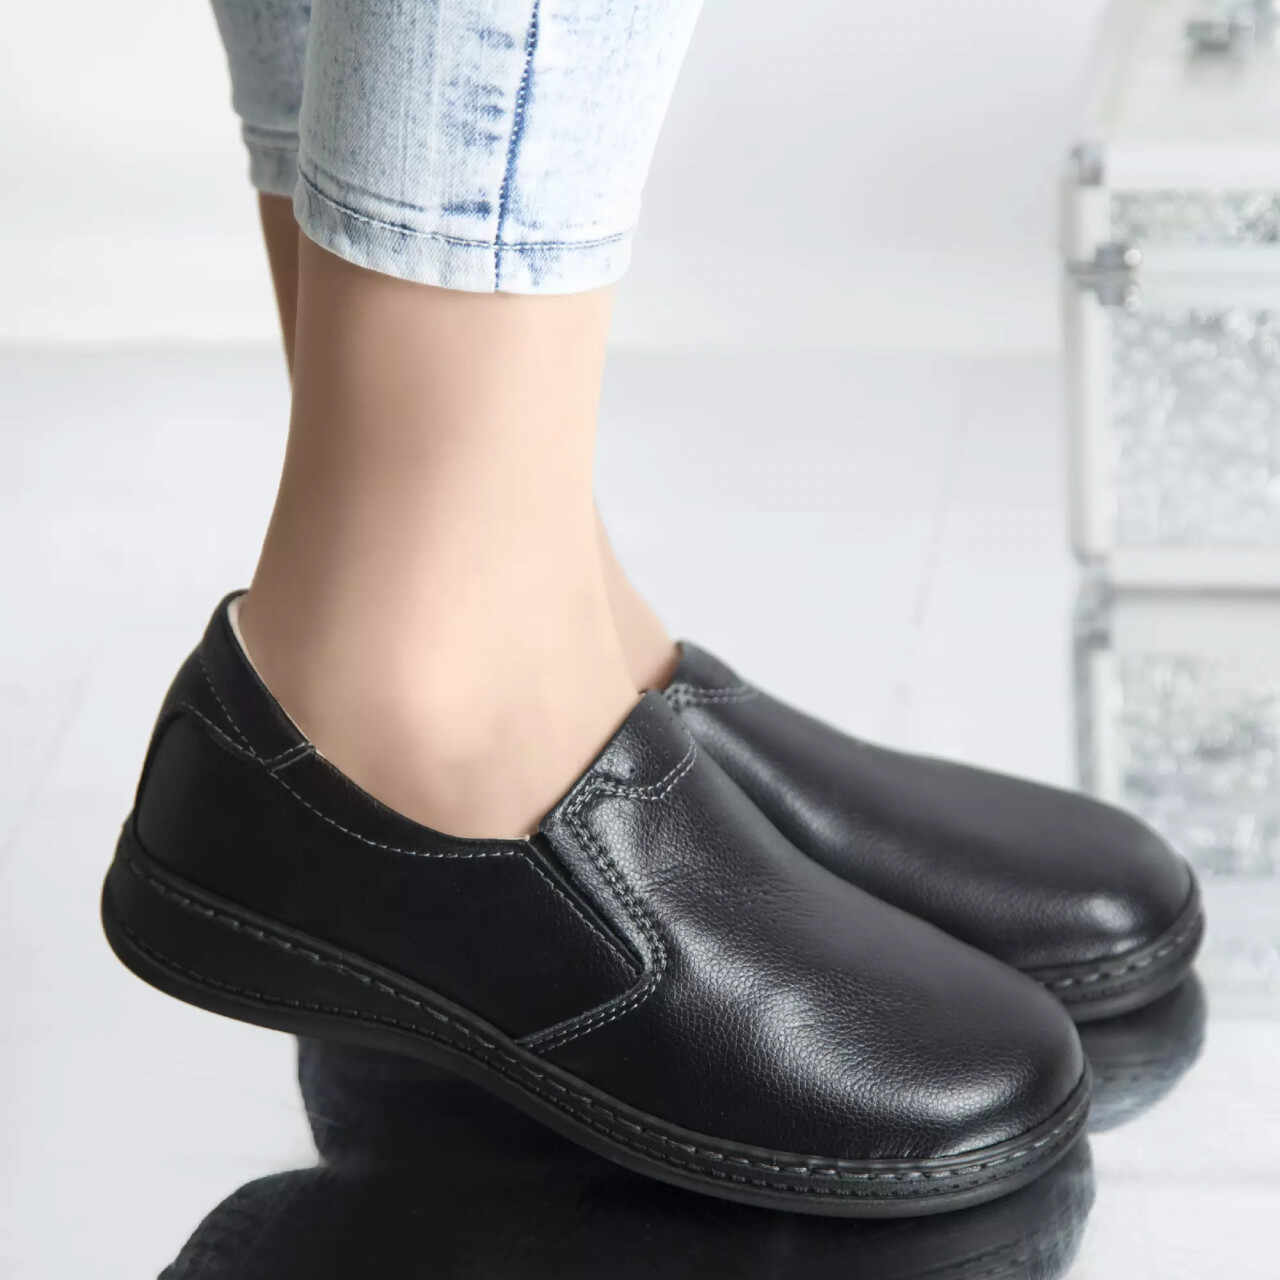 Pantofi casual deborah negru piele naturala